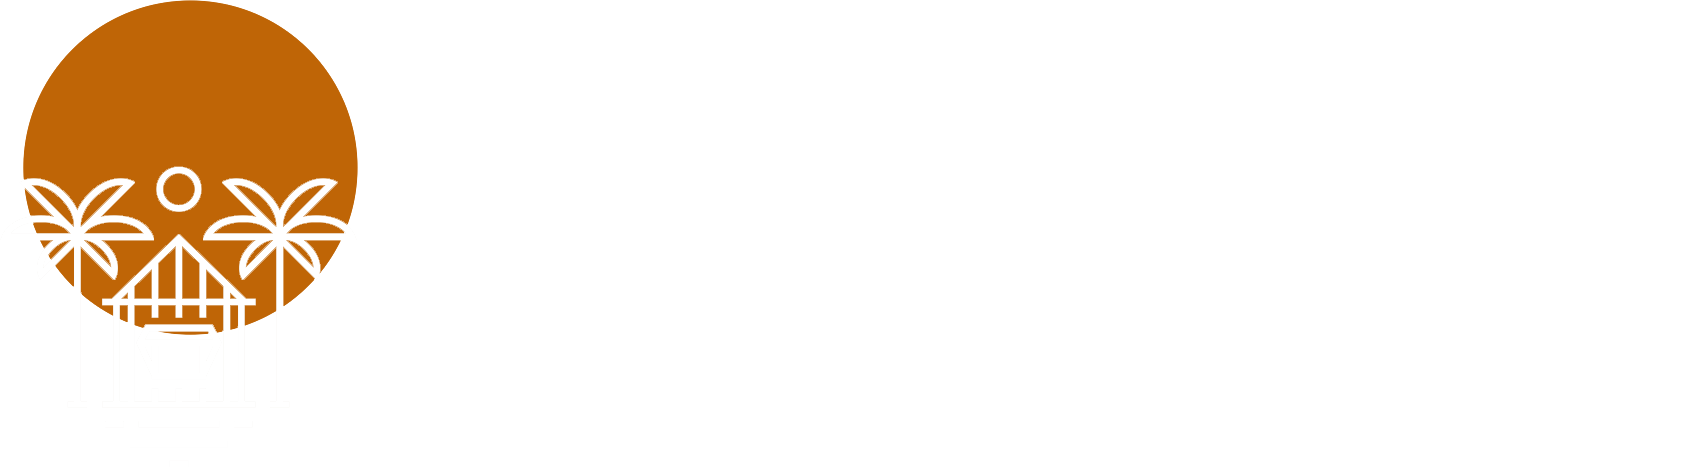 Diva Turka Beach & Hotel